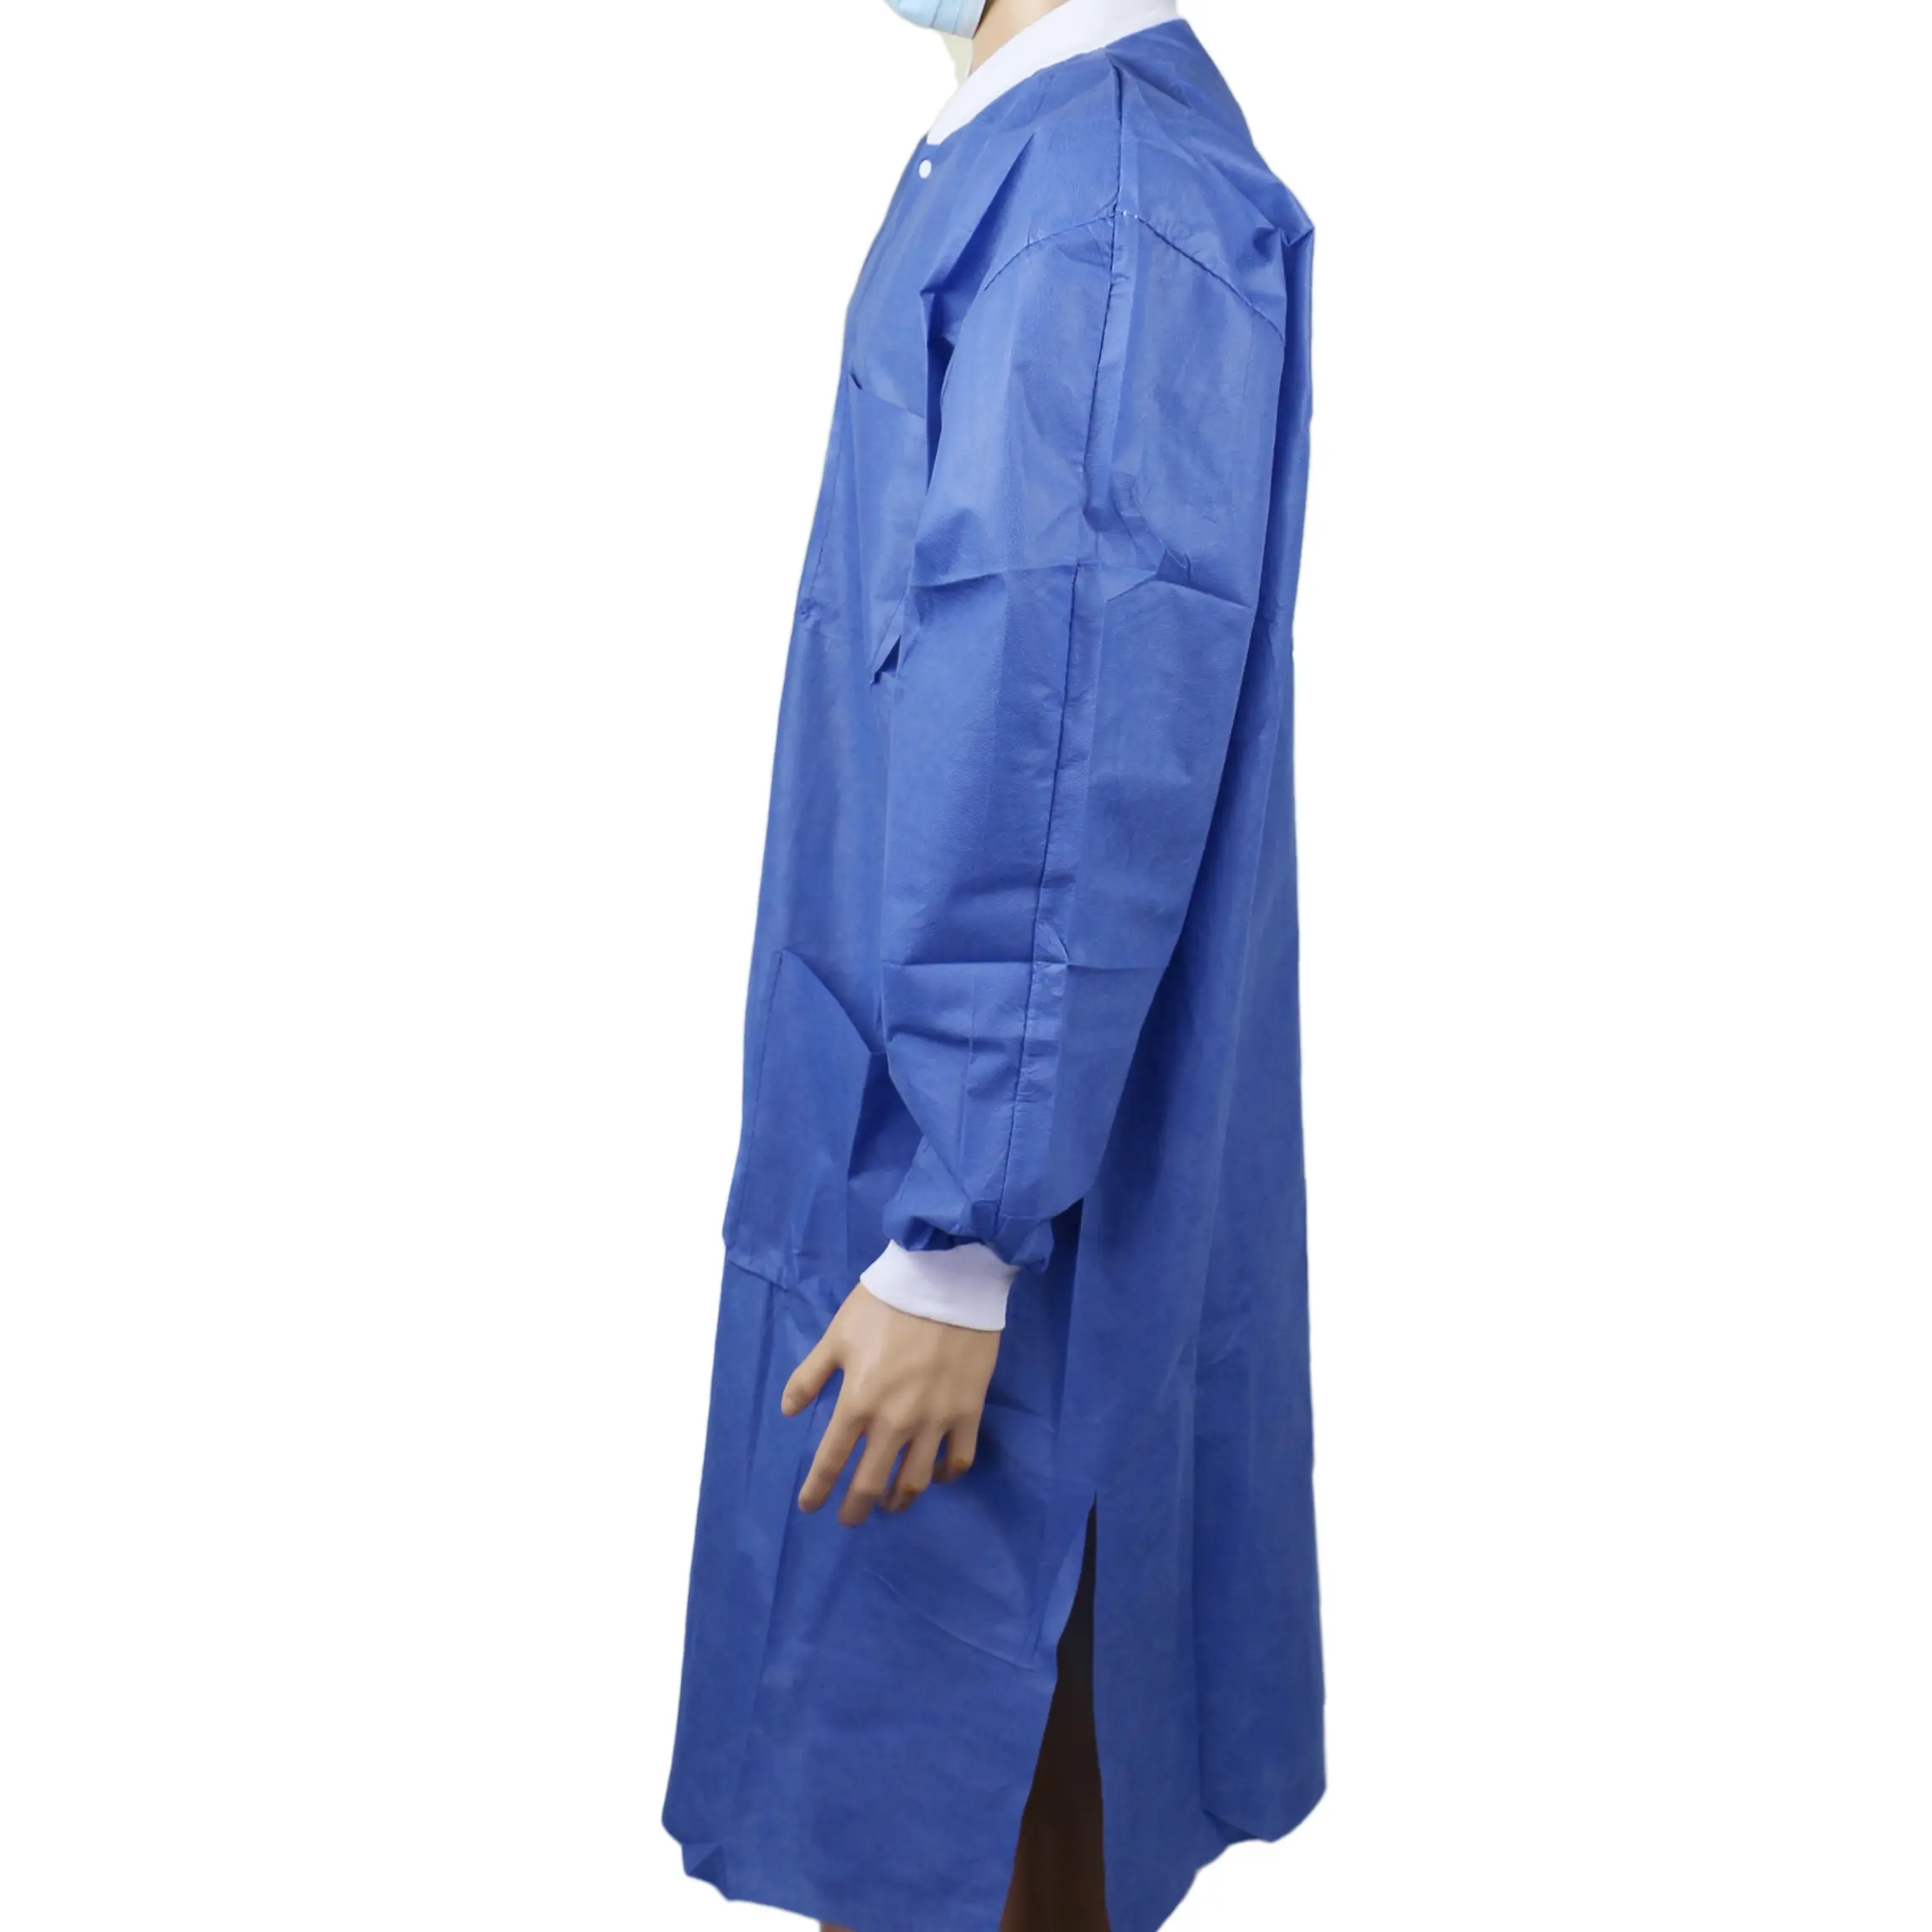 Pe Lab Coat Uniform Kleidung Uniform Kleider Lab Coa Medical Hospital Krankens ch western Vlies Pp Sms Pp Weiß Rosa Schwarz Blau 5000 Stk